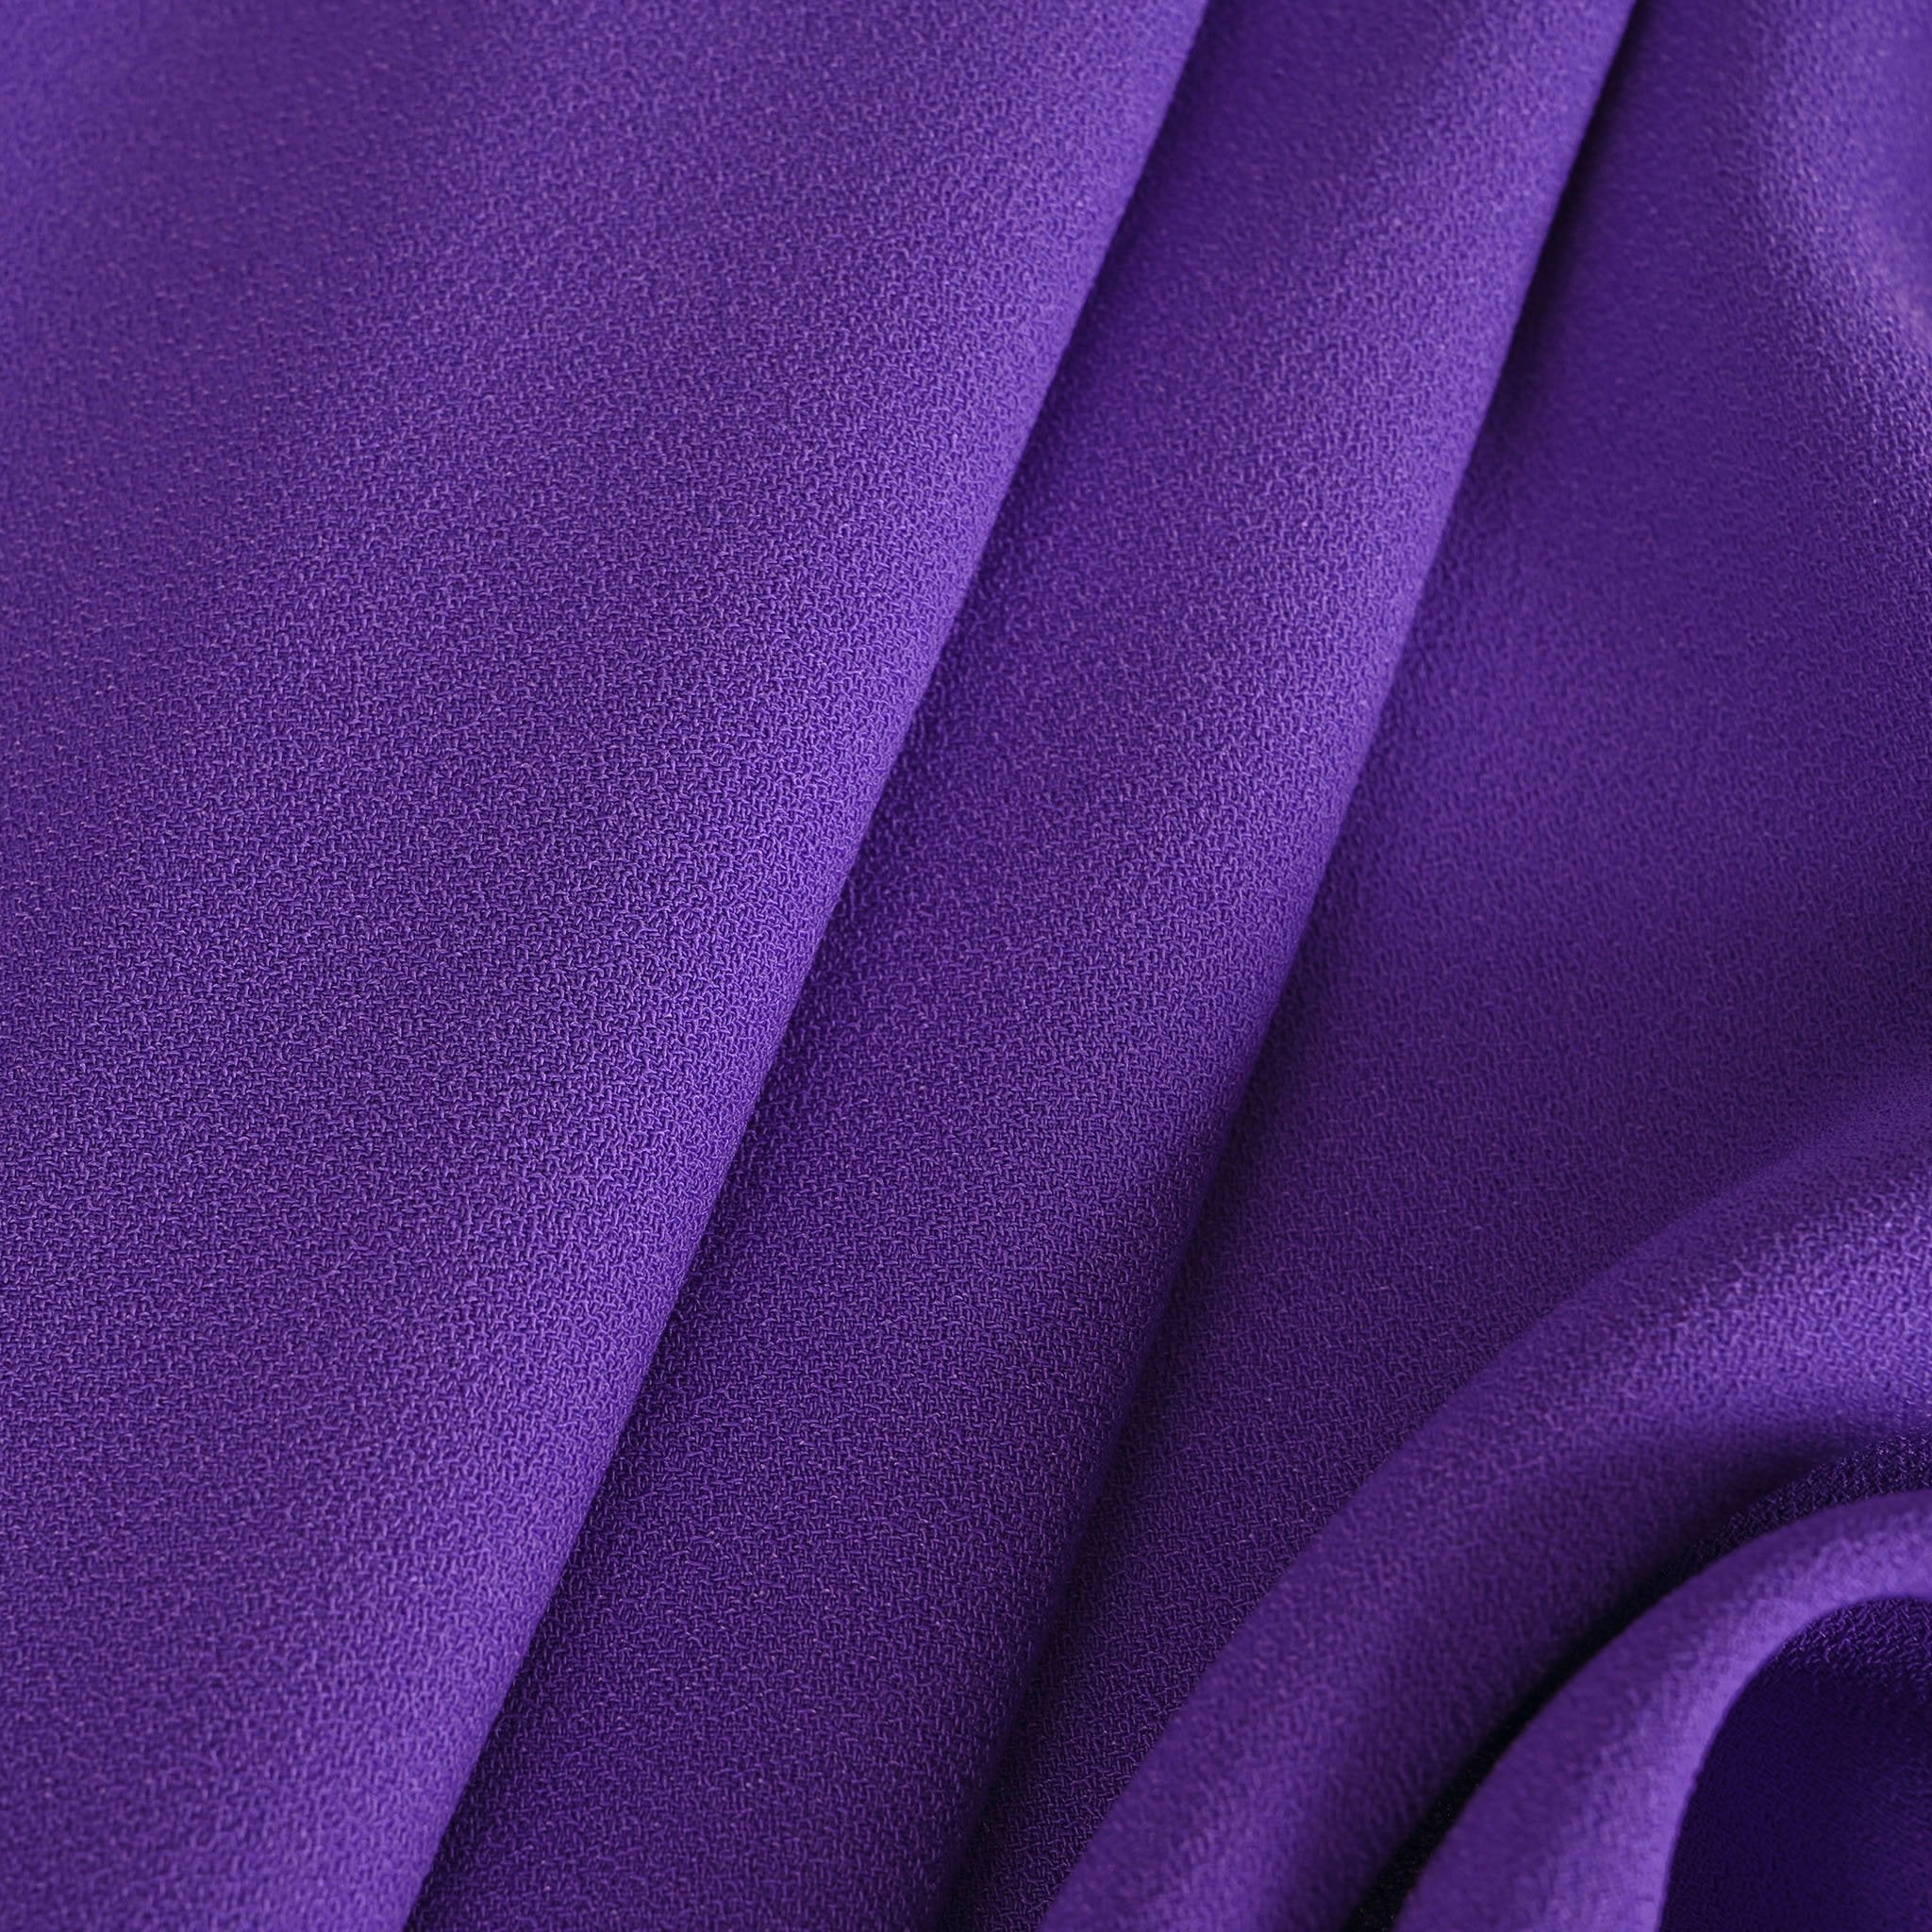 Purple Crepe Fabric 2566